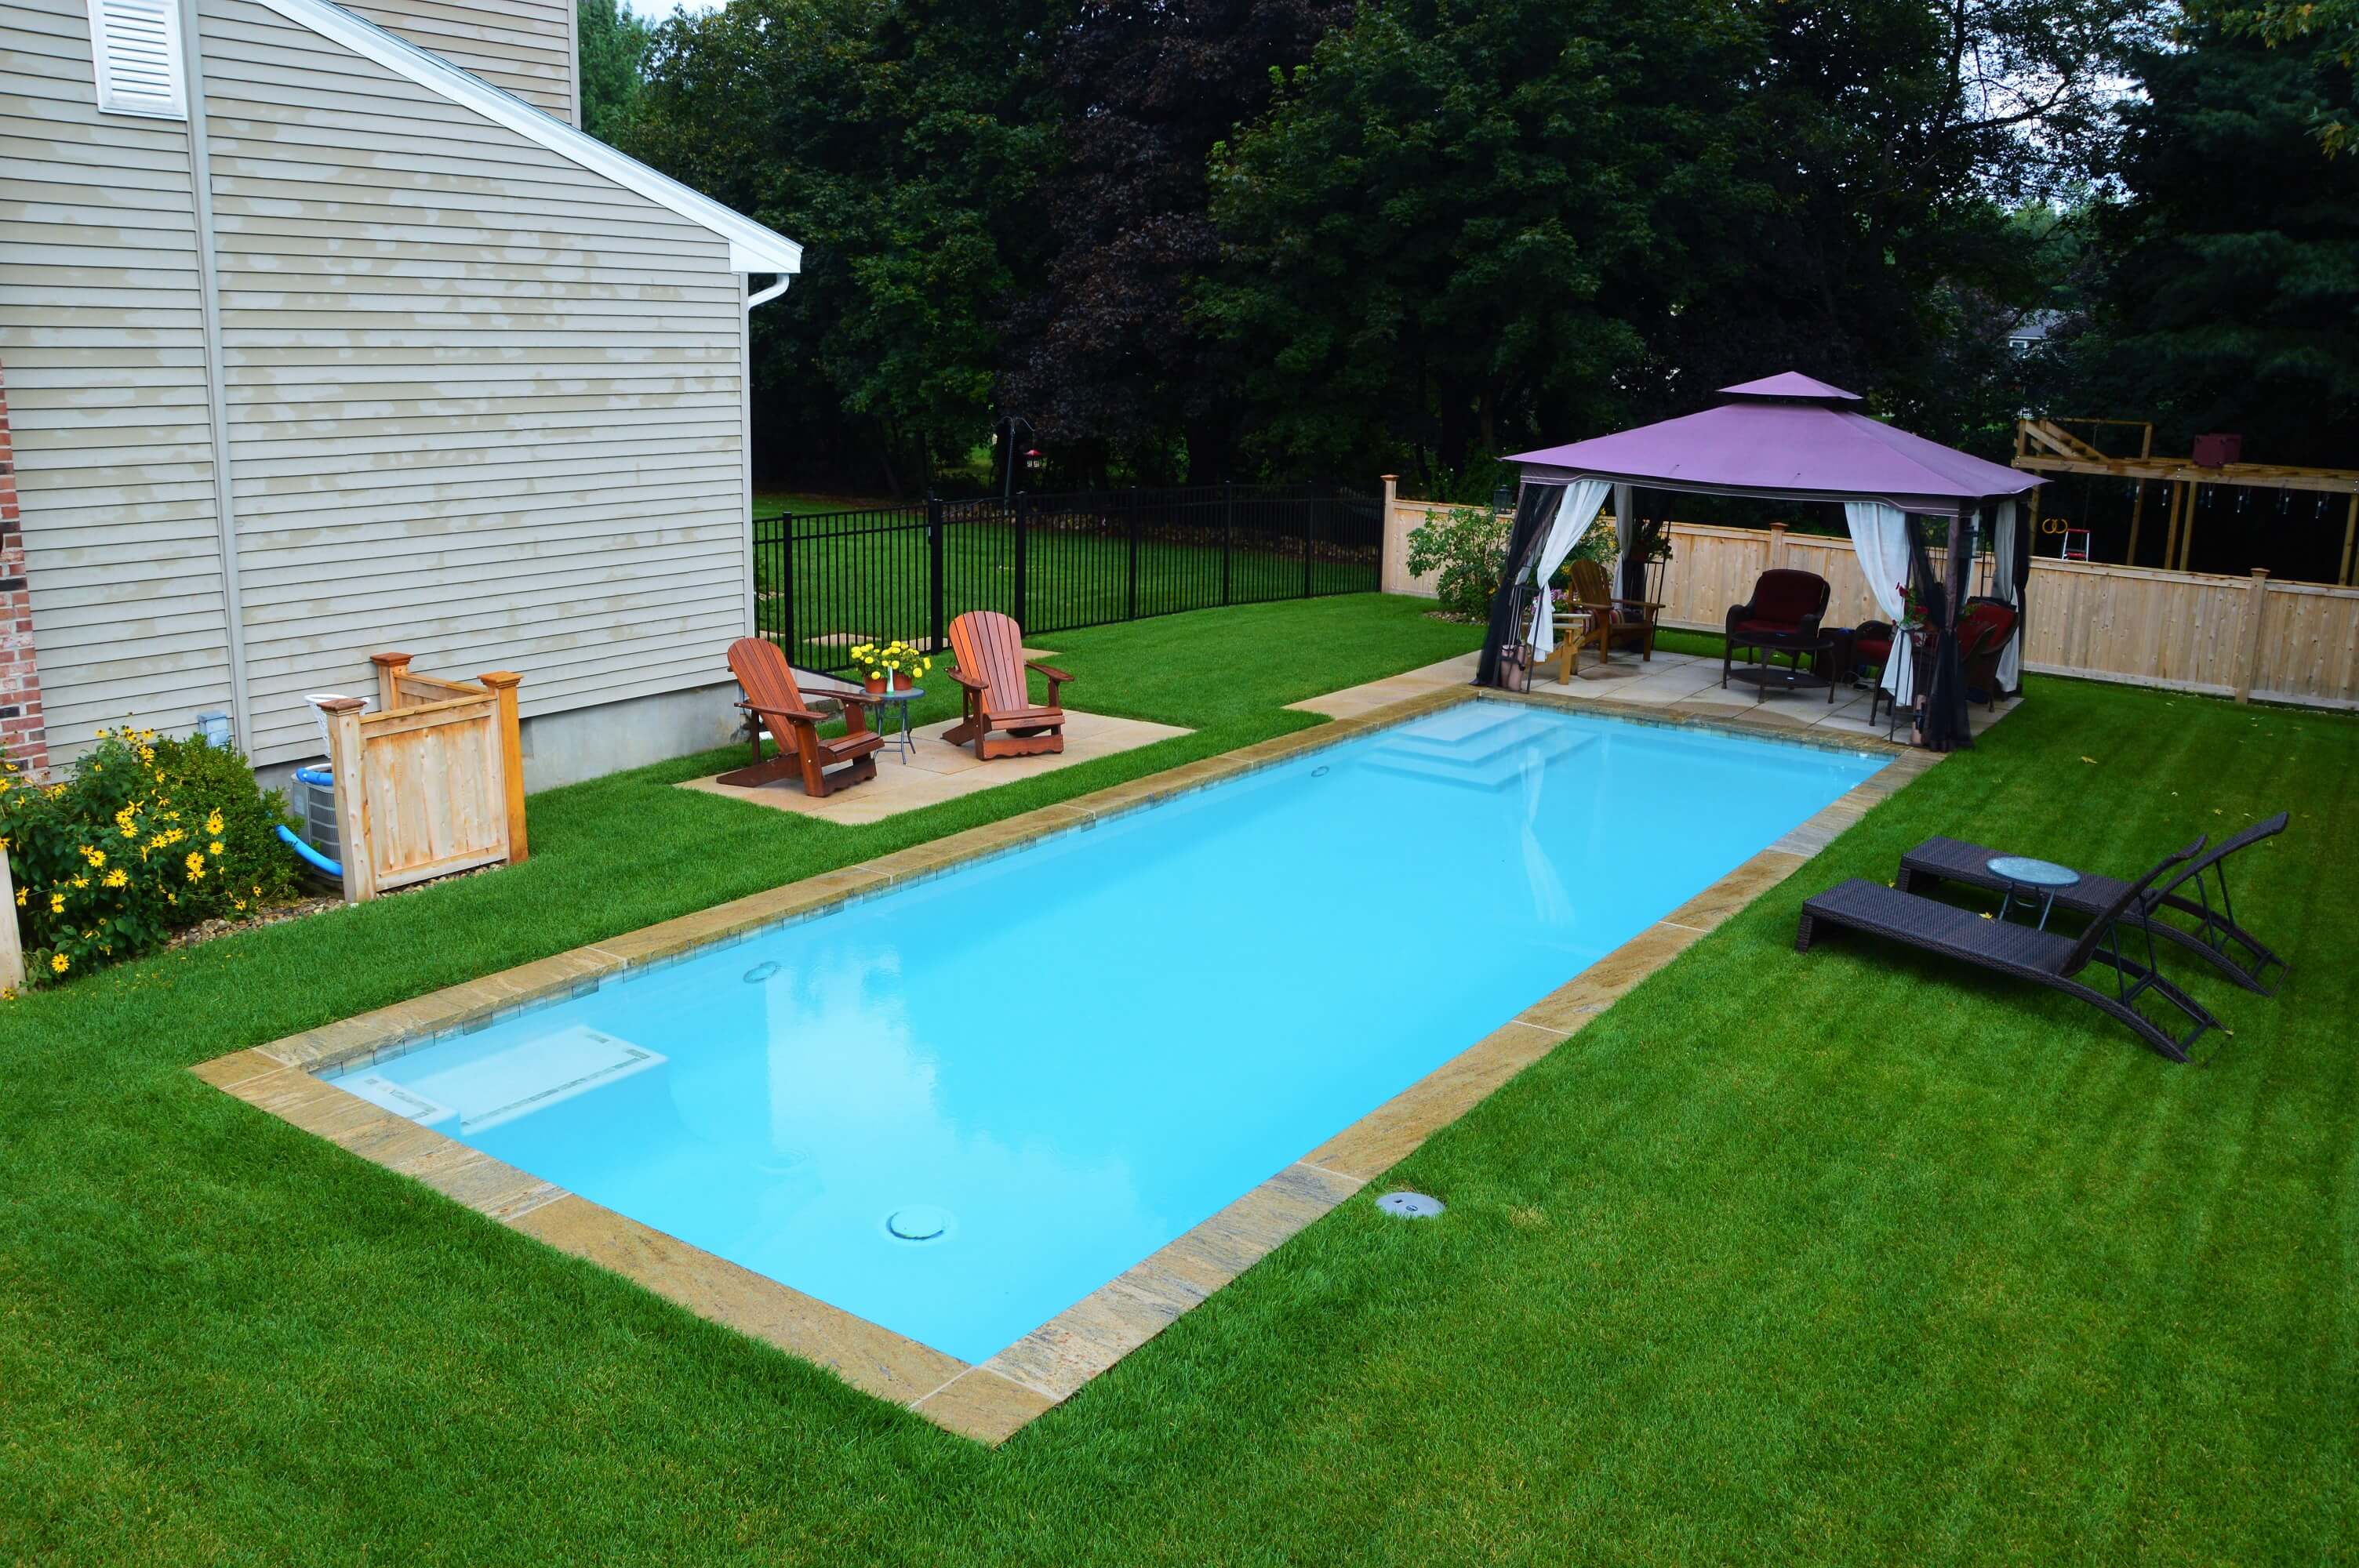 Aqua Pool & Patio gunite swimming pool construction in Connecticut showing geometric pool wtih seating